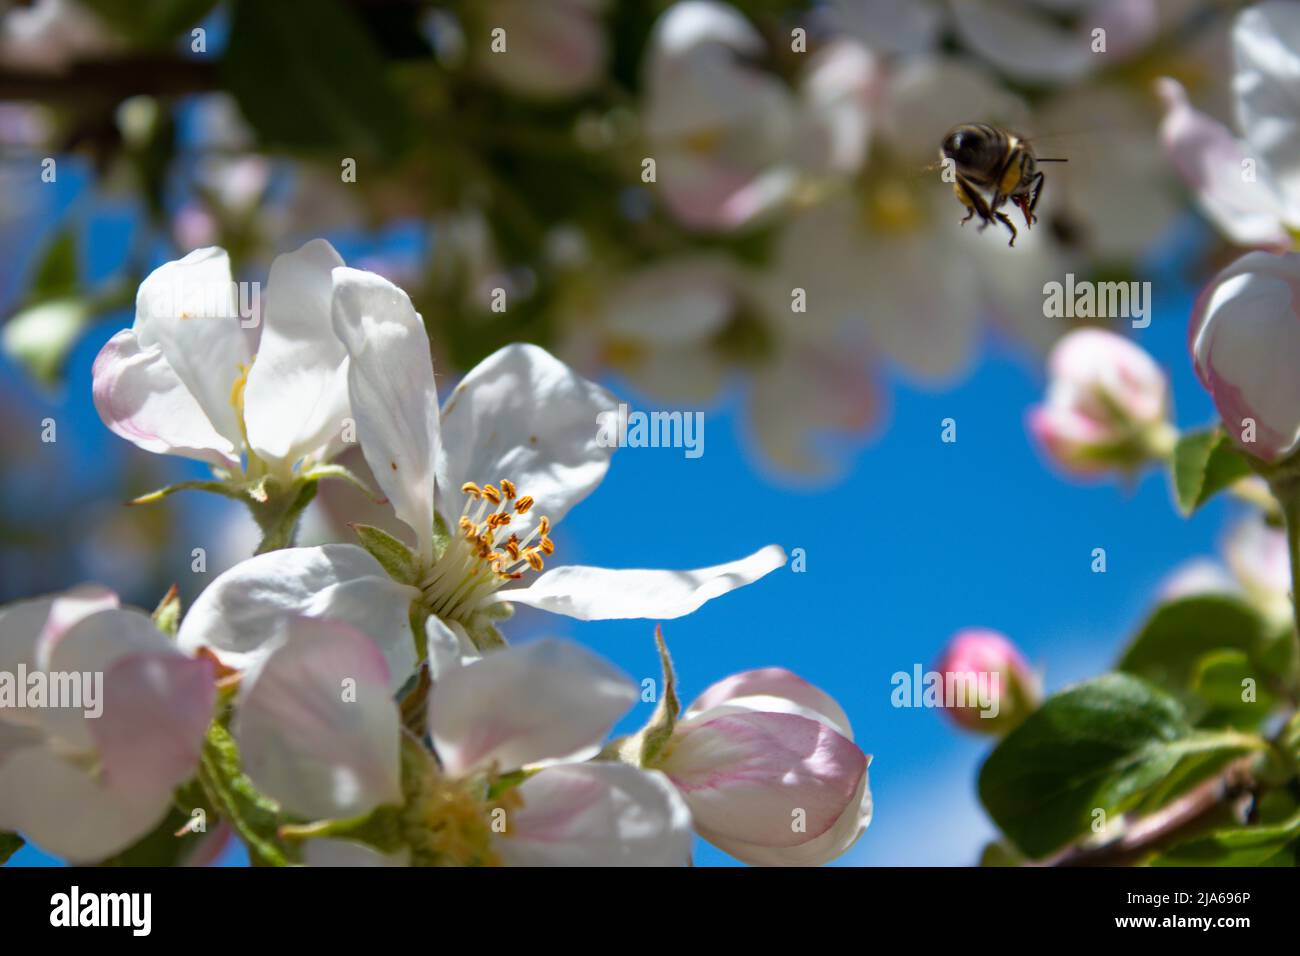 bee flying over flowers Stock Photo